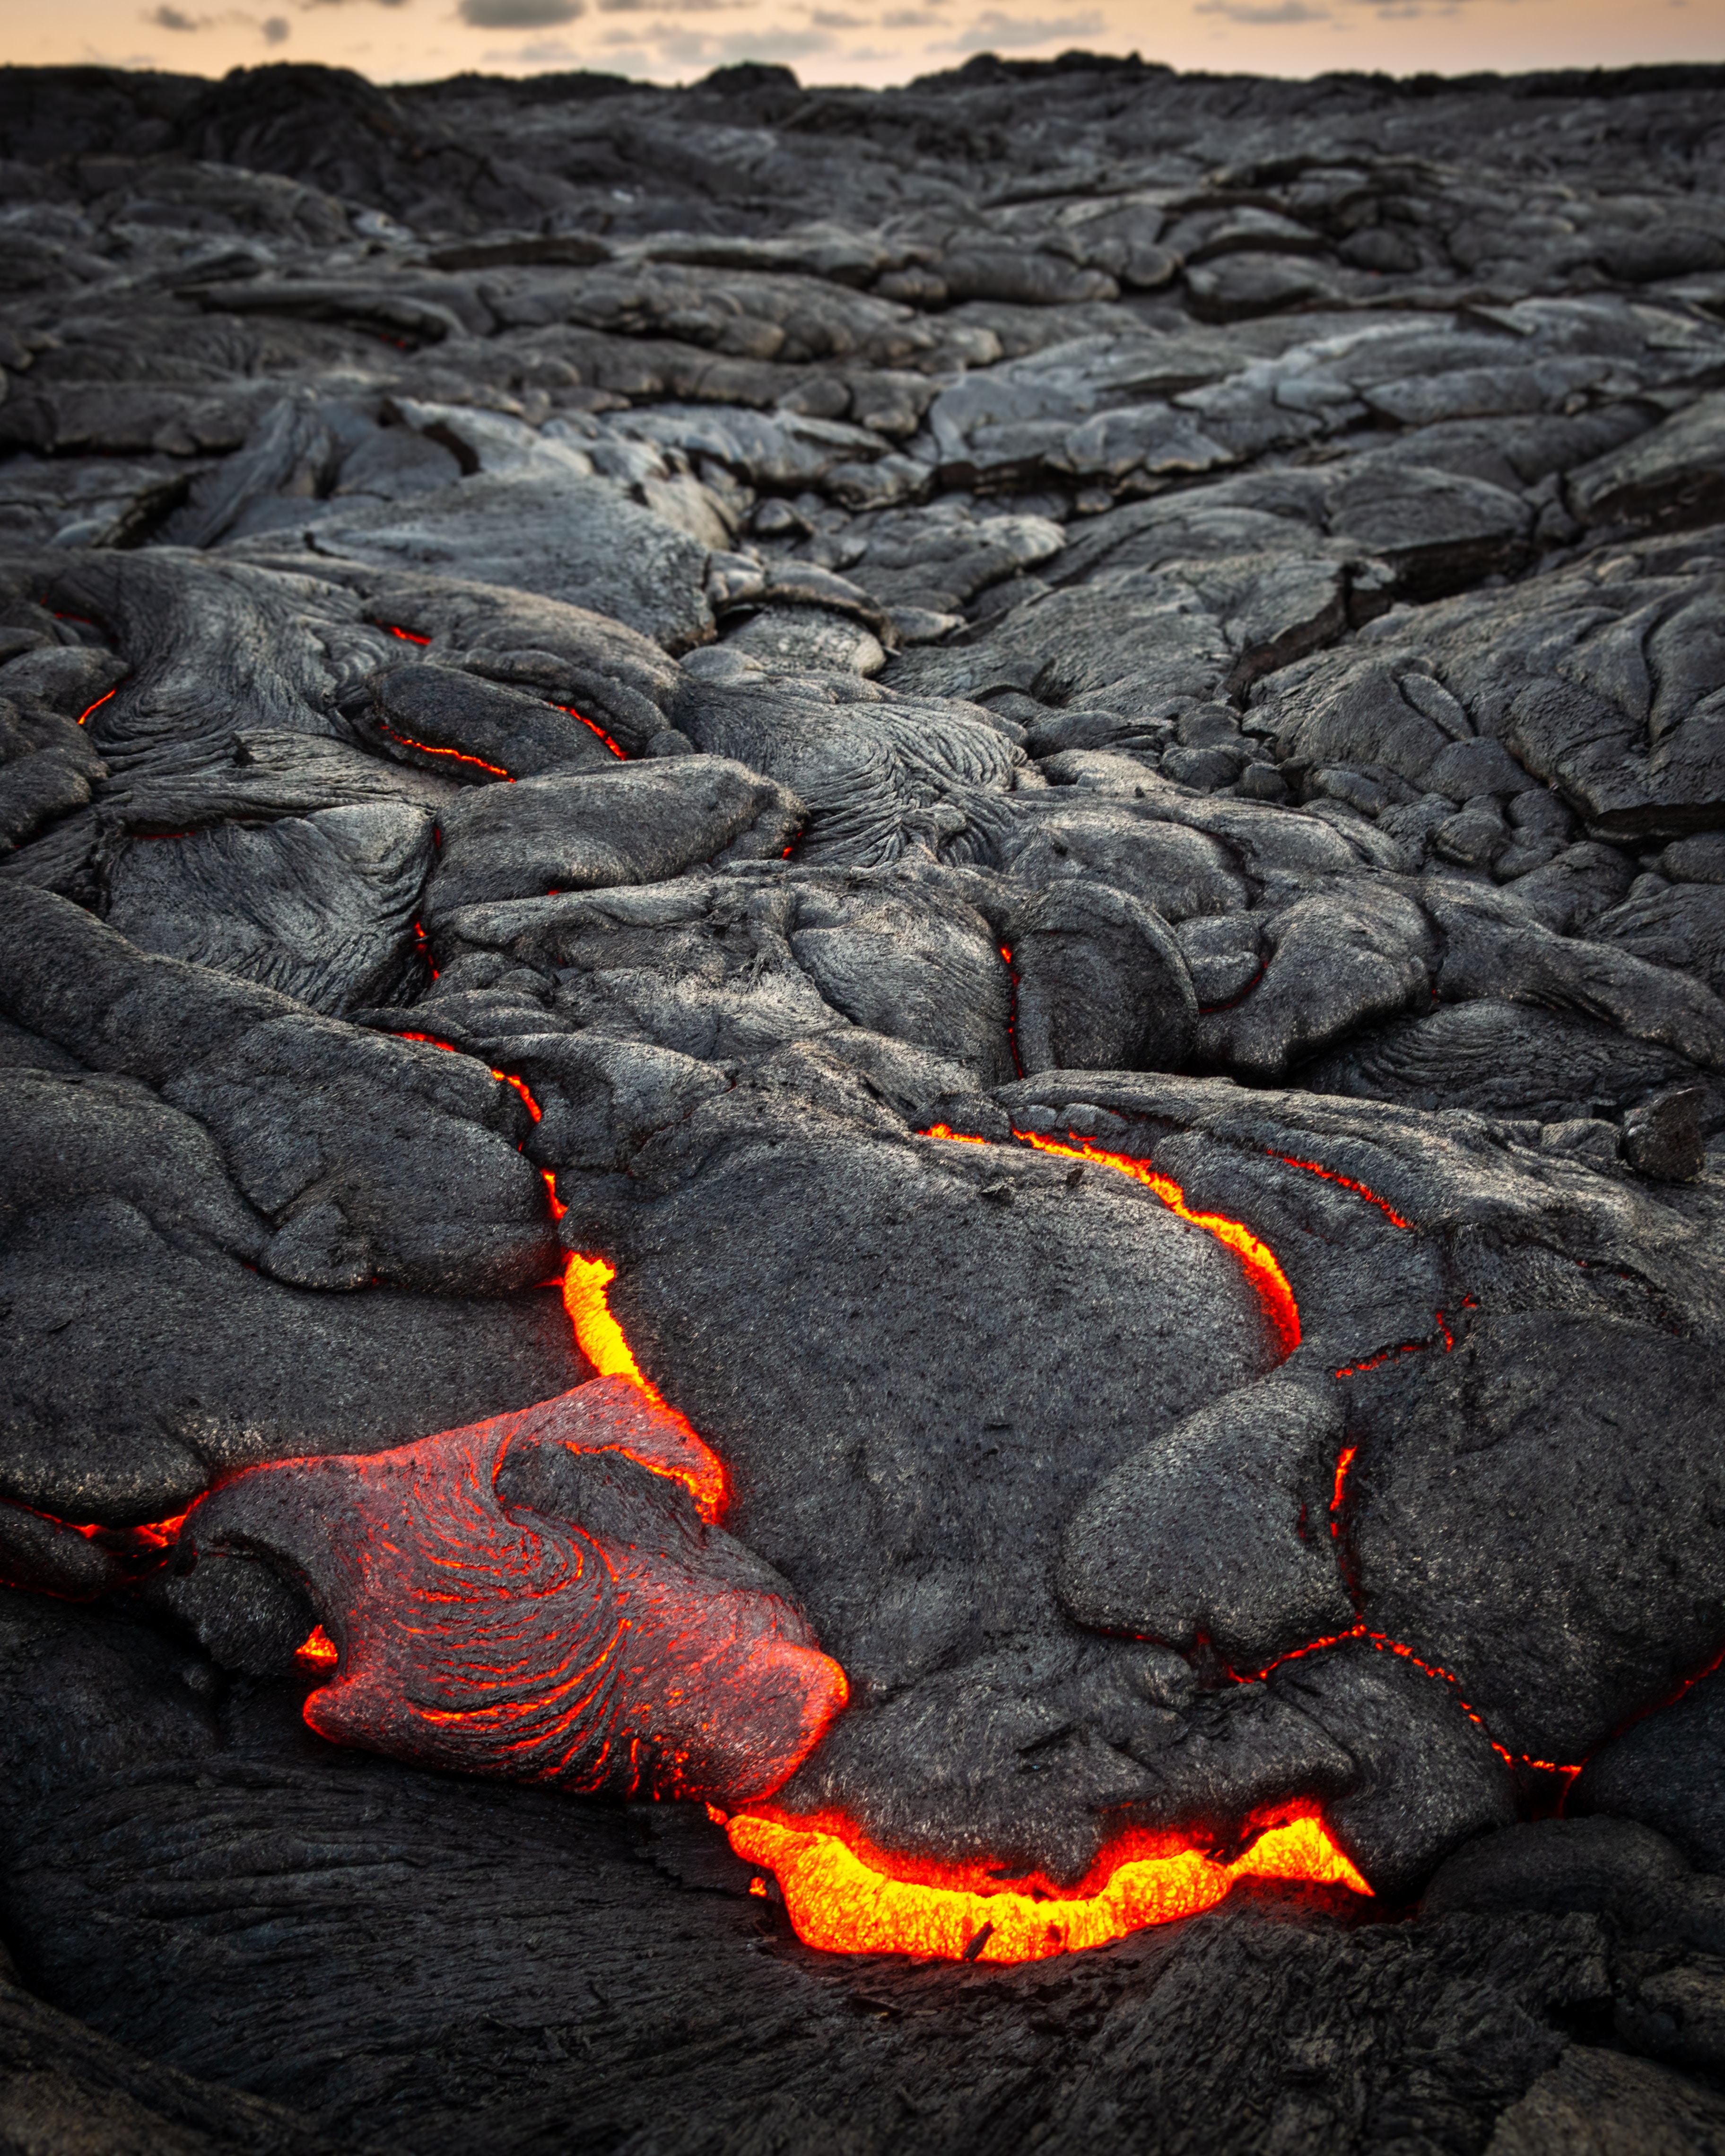 130101 descargar imagen lava, naturaleza, superficie, irregularidades, volcán, ardiente: fondos de pantalla y protectores de pantalla gratis